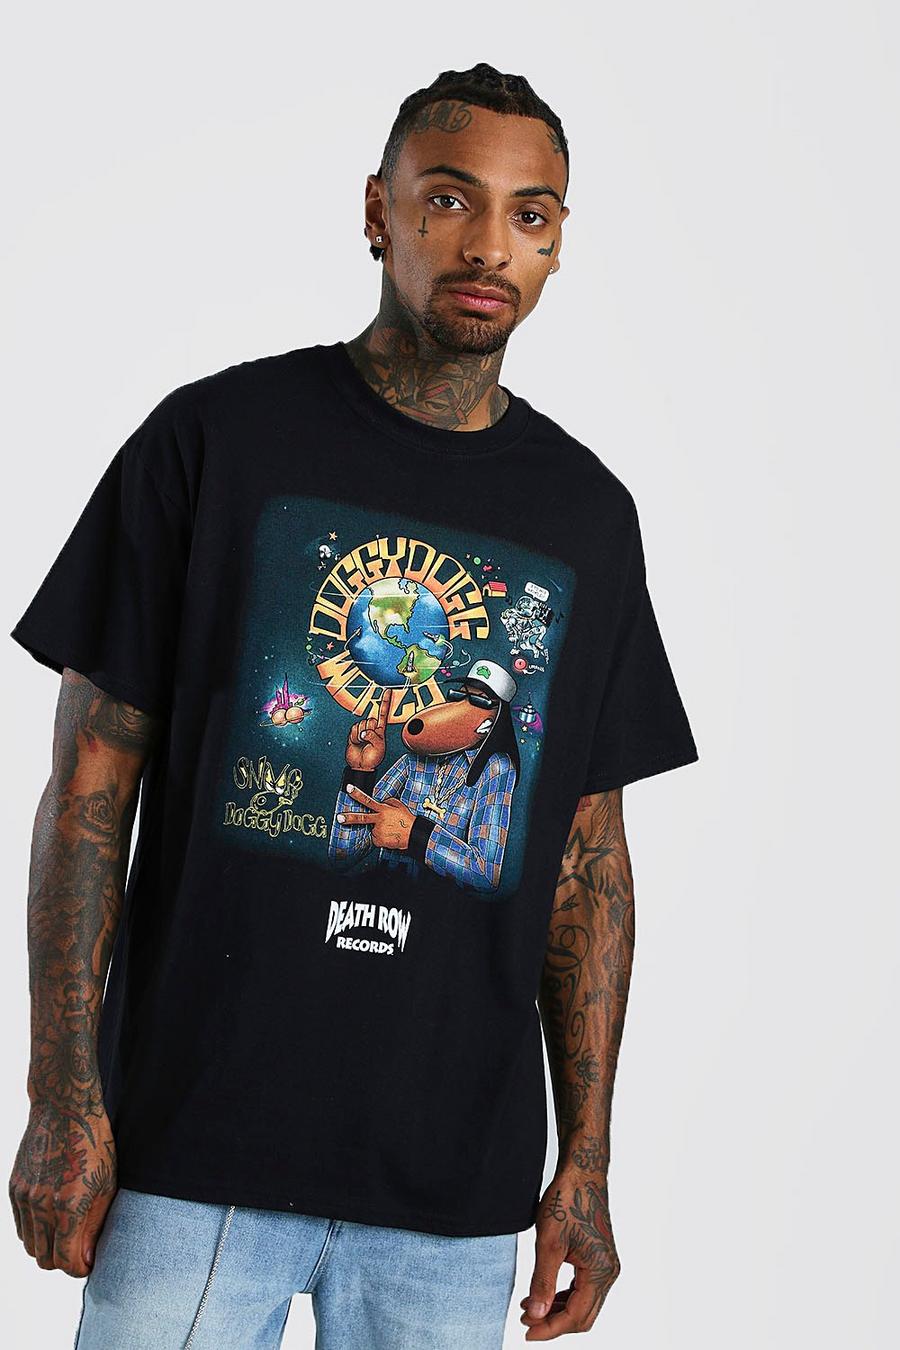 Snoop Dogg Death Row License T-Shirt